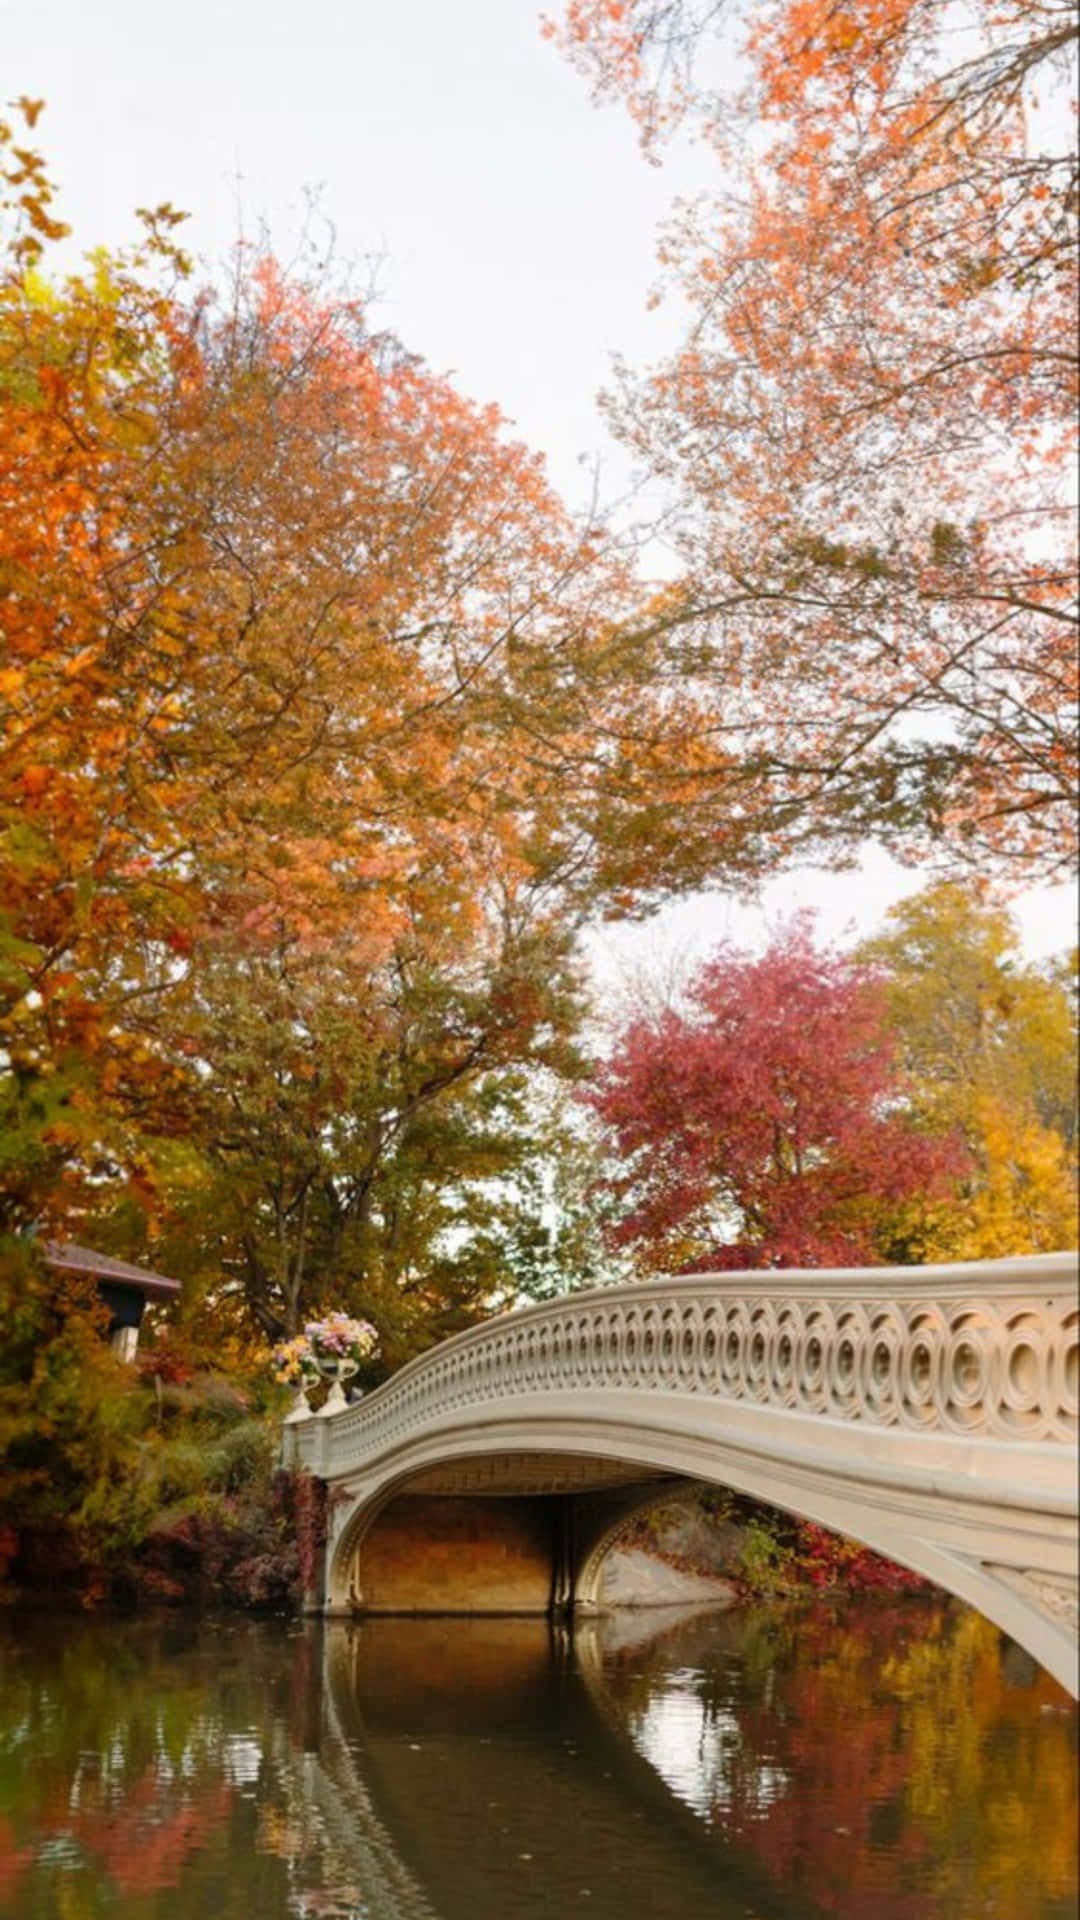 Autumnal Bridge Over Tranquil Water.jpg Wallpaper